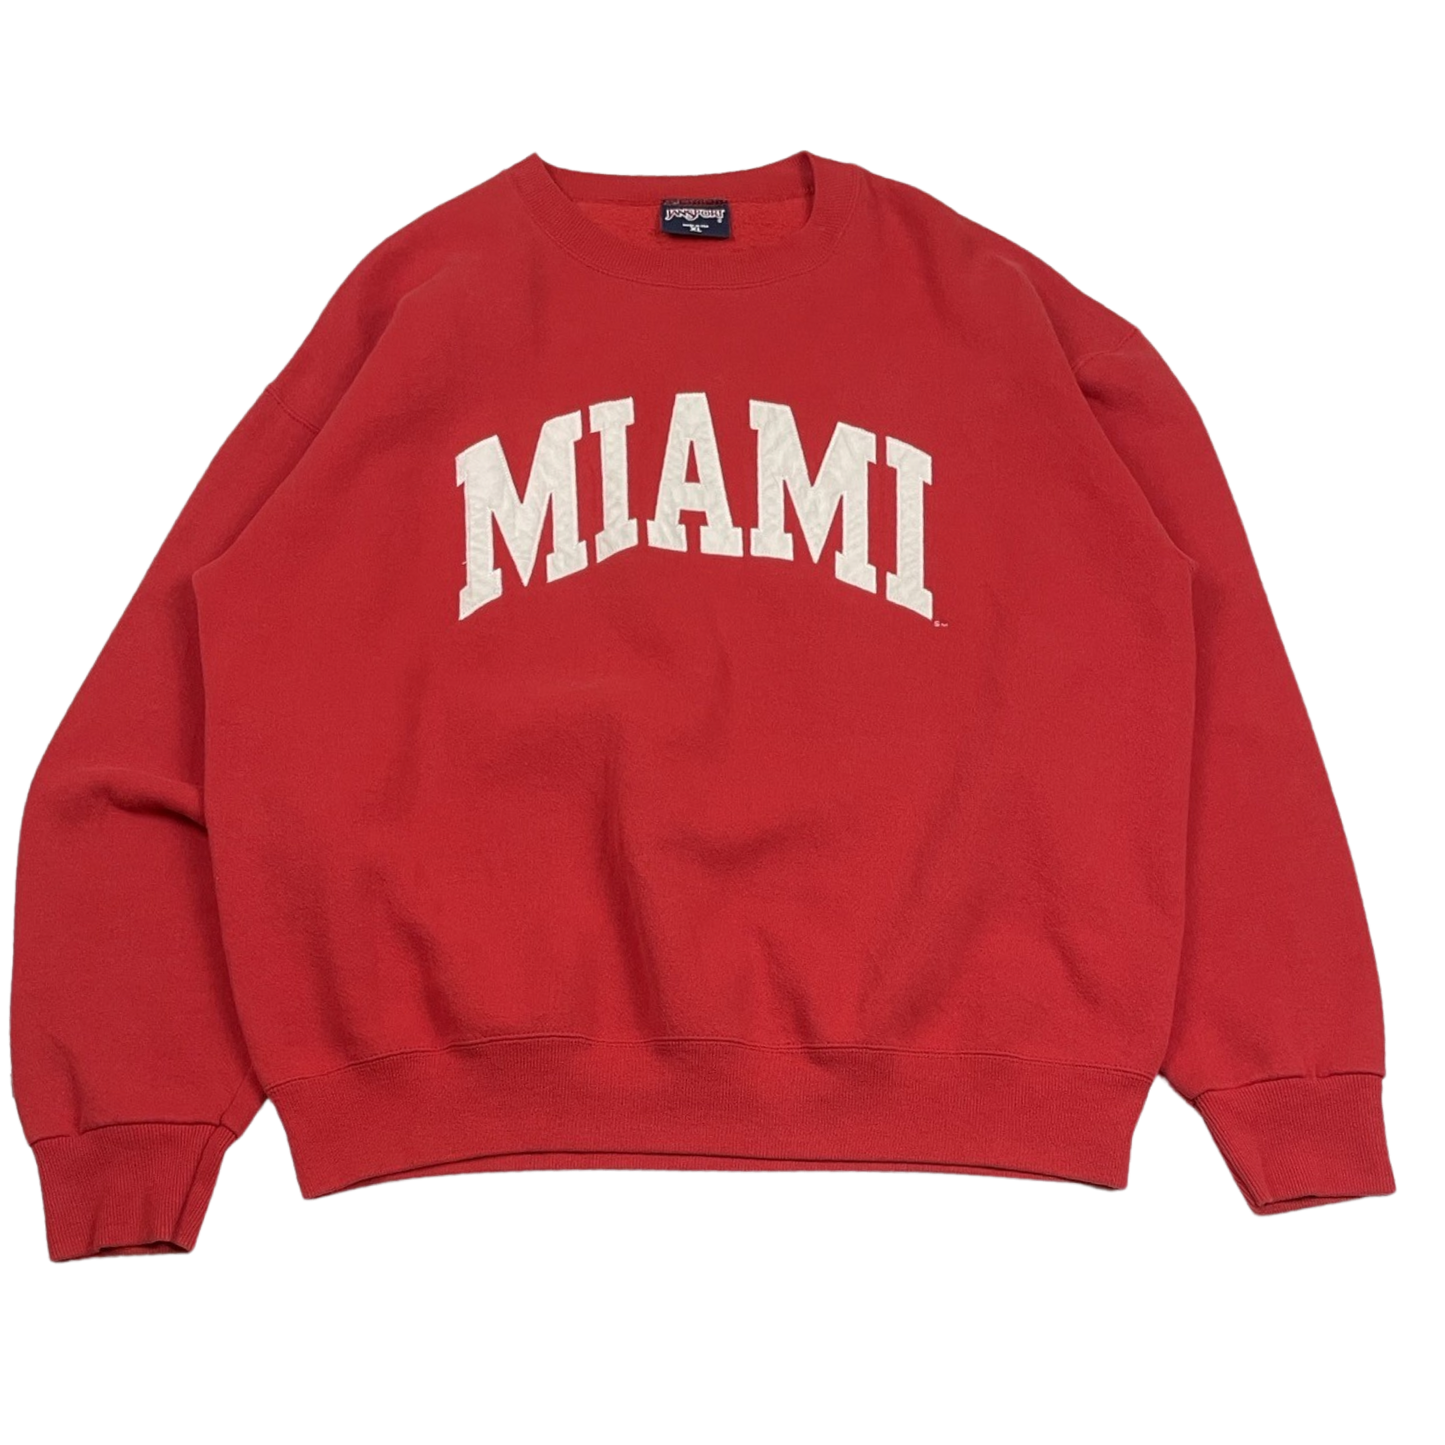 '90s Miami of Ohio Embroidered Crewneck